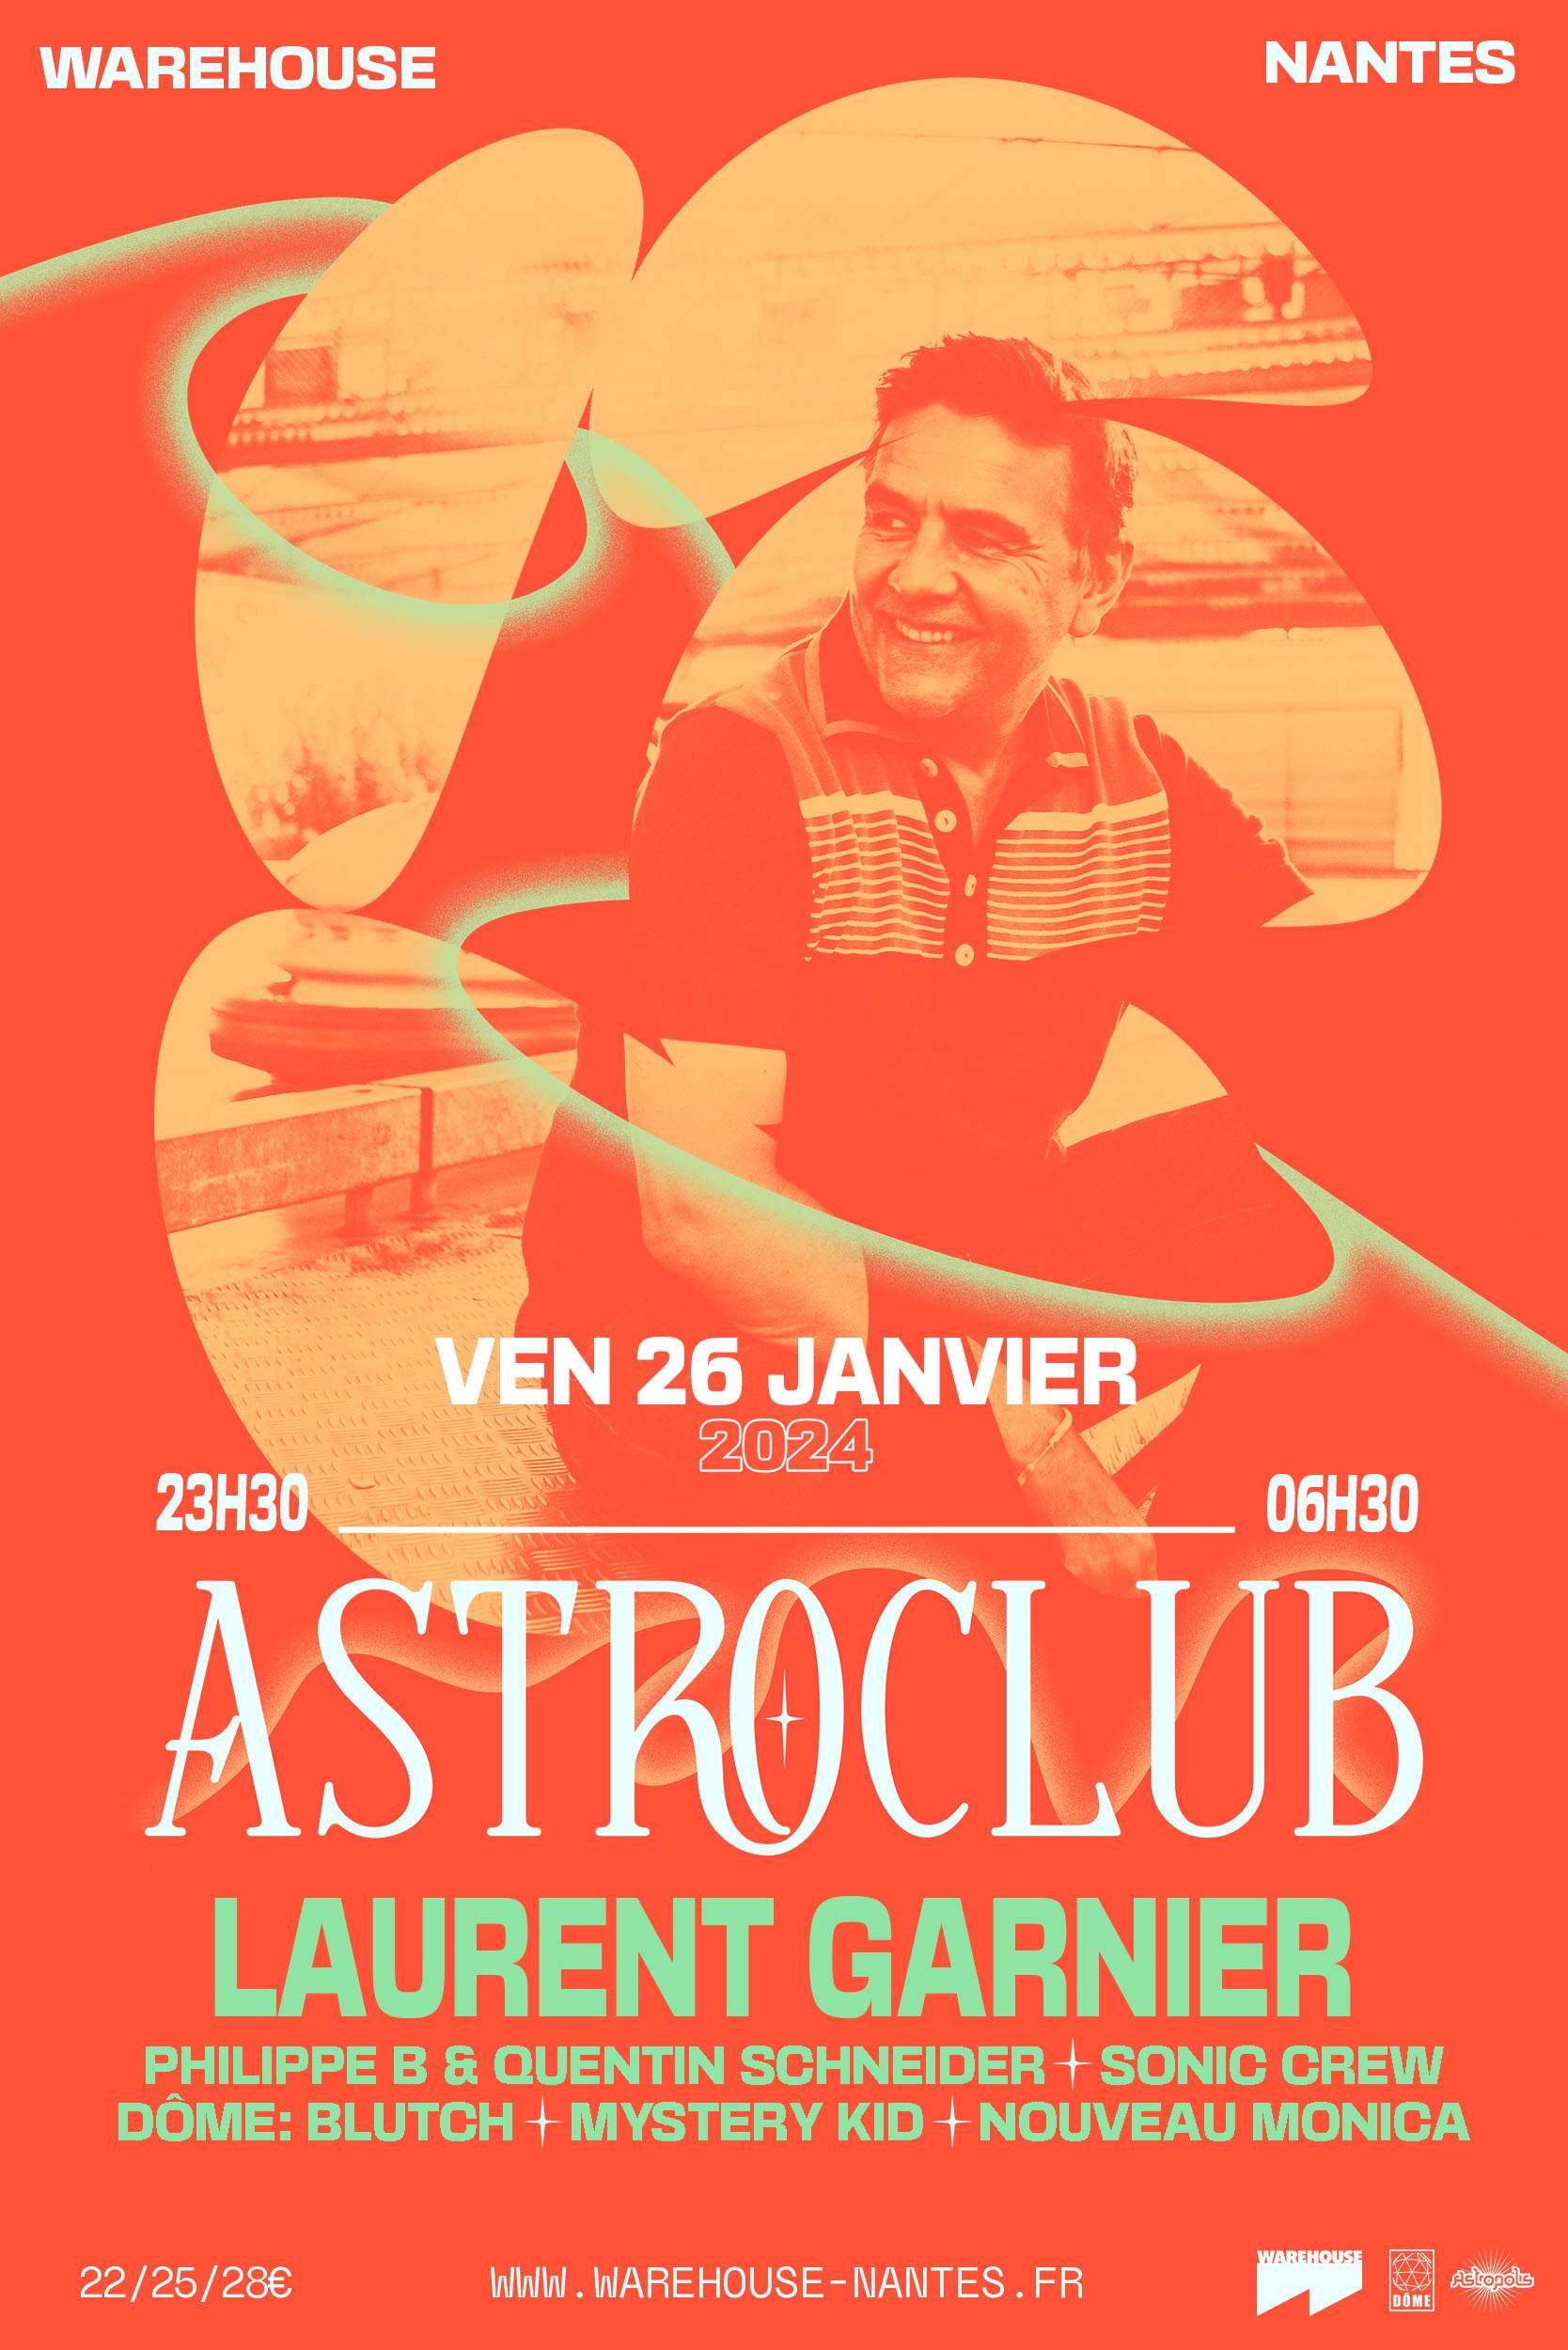 Astroclub: Laurent Garnier (Warehouse - Nantes) - フライヤー表